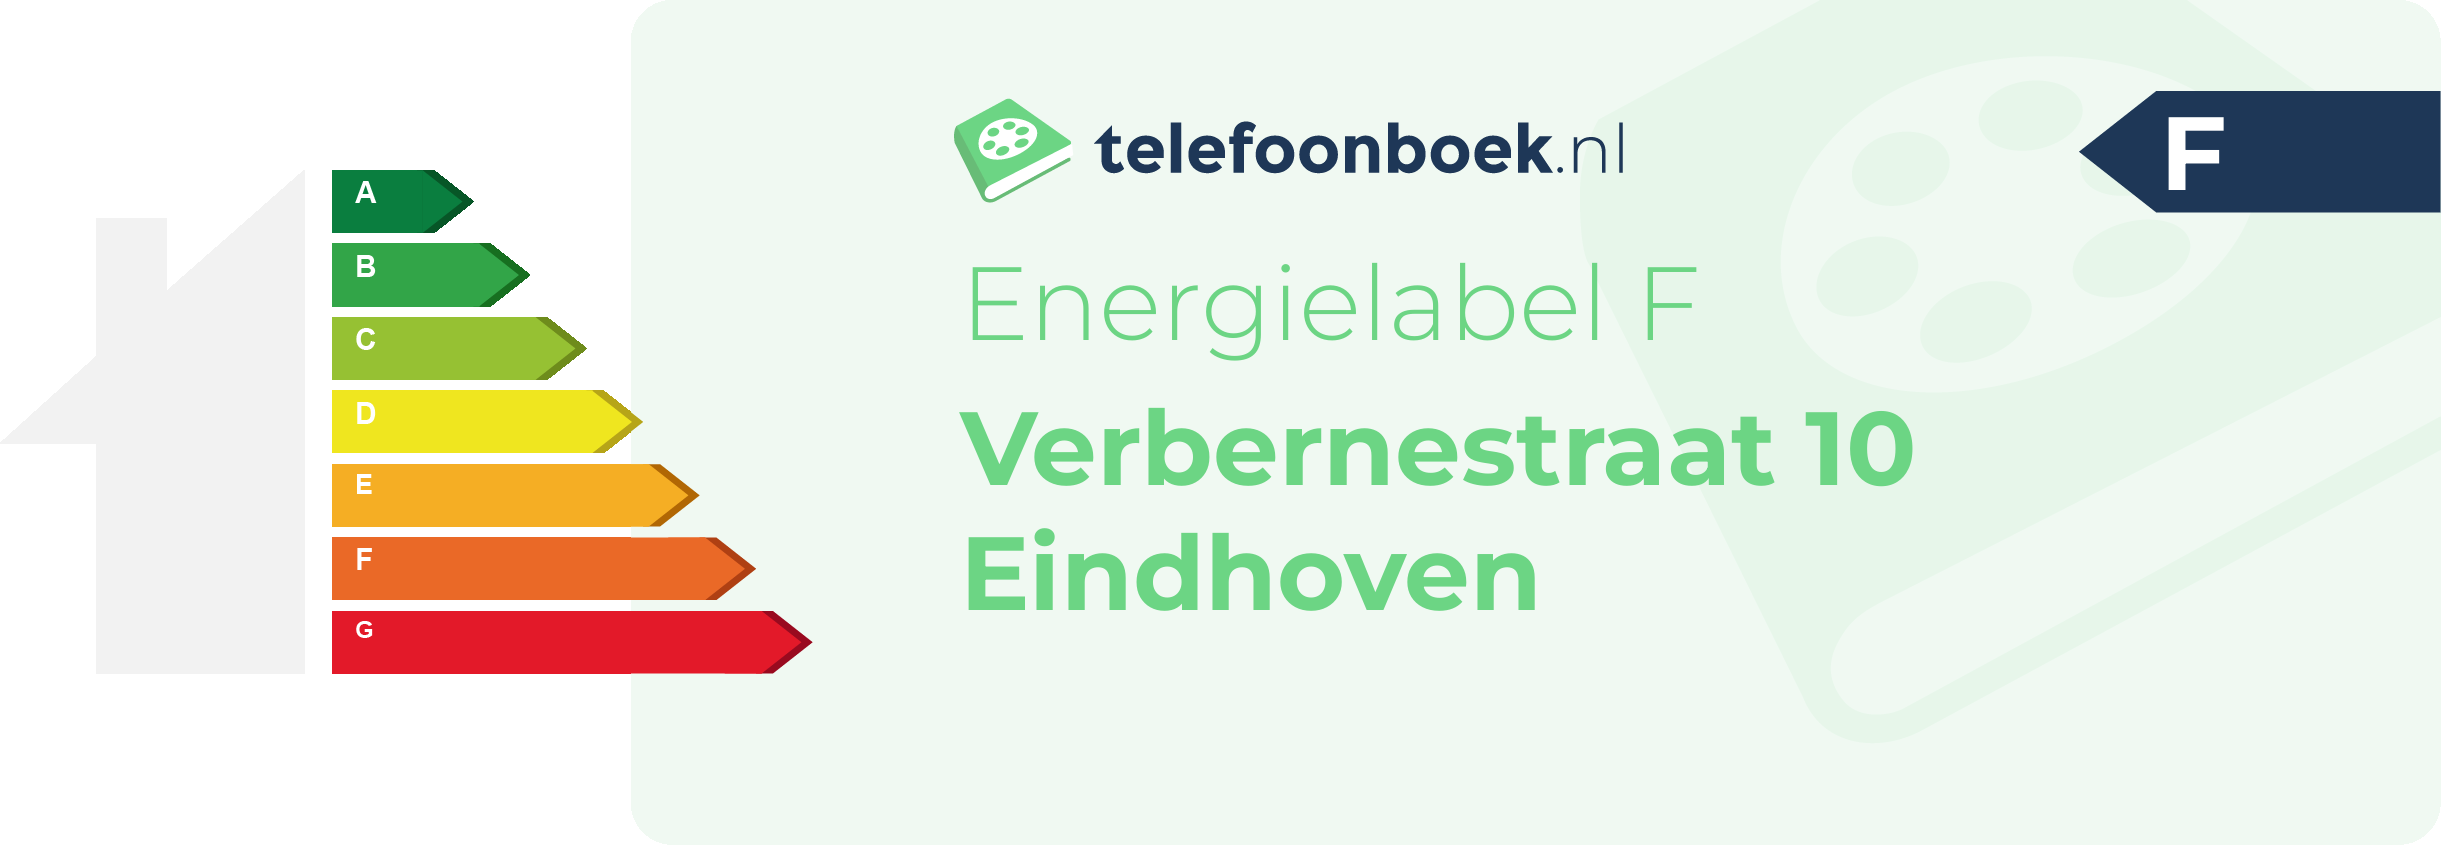 Energielabel Verbernestraat 10 Eindhoven